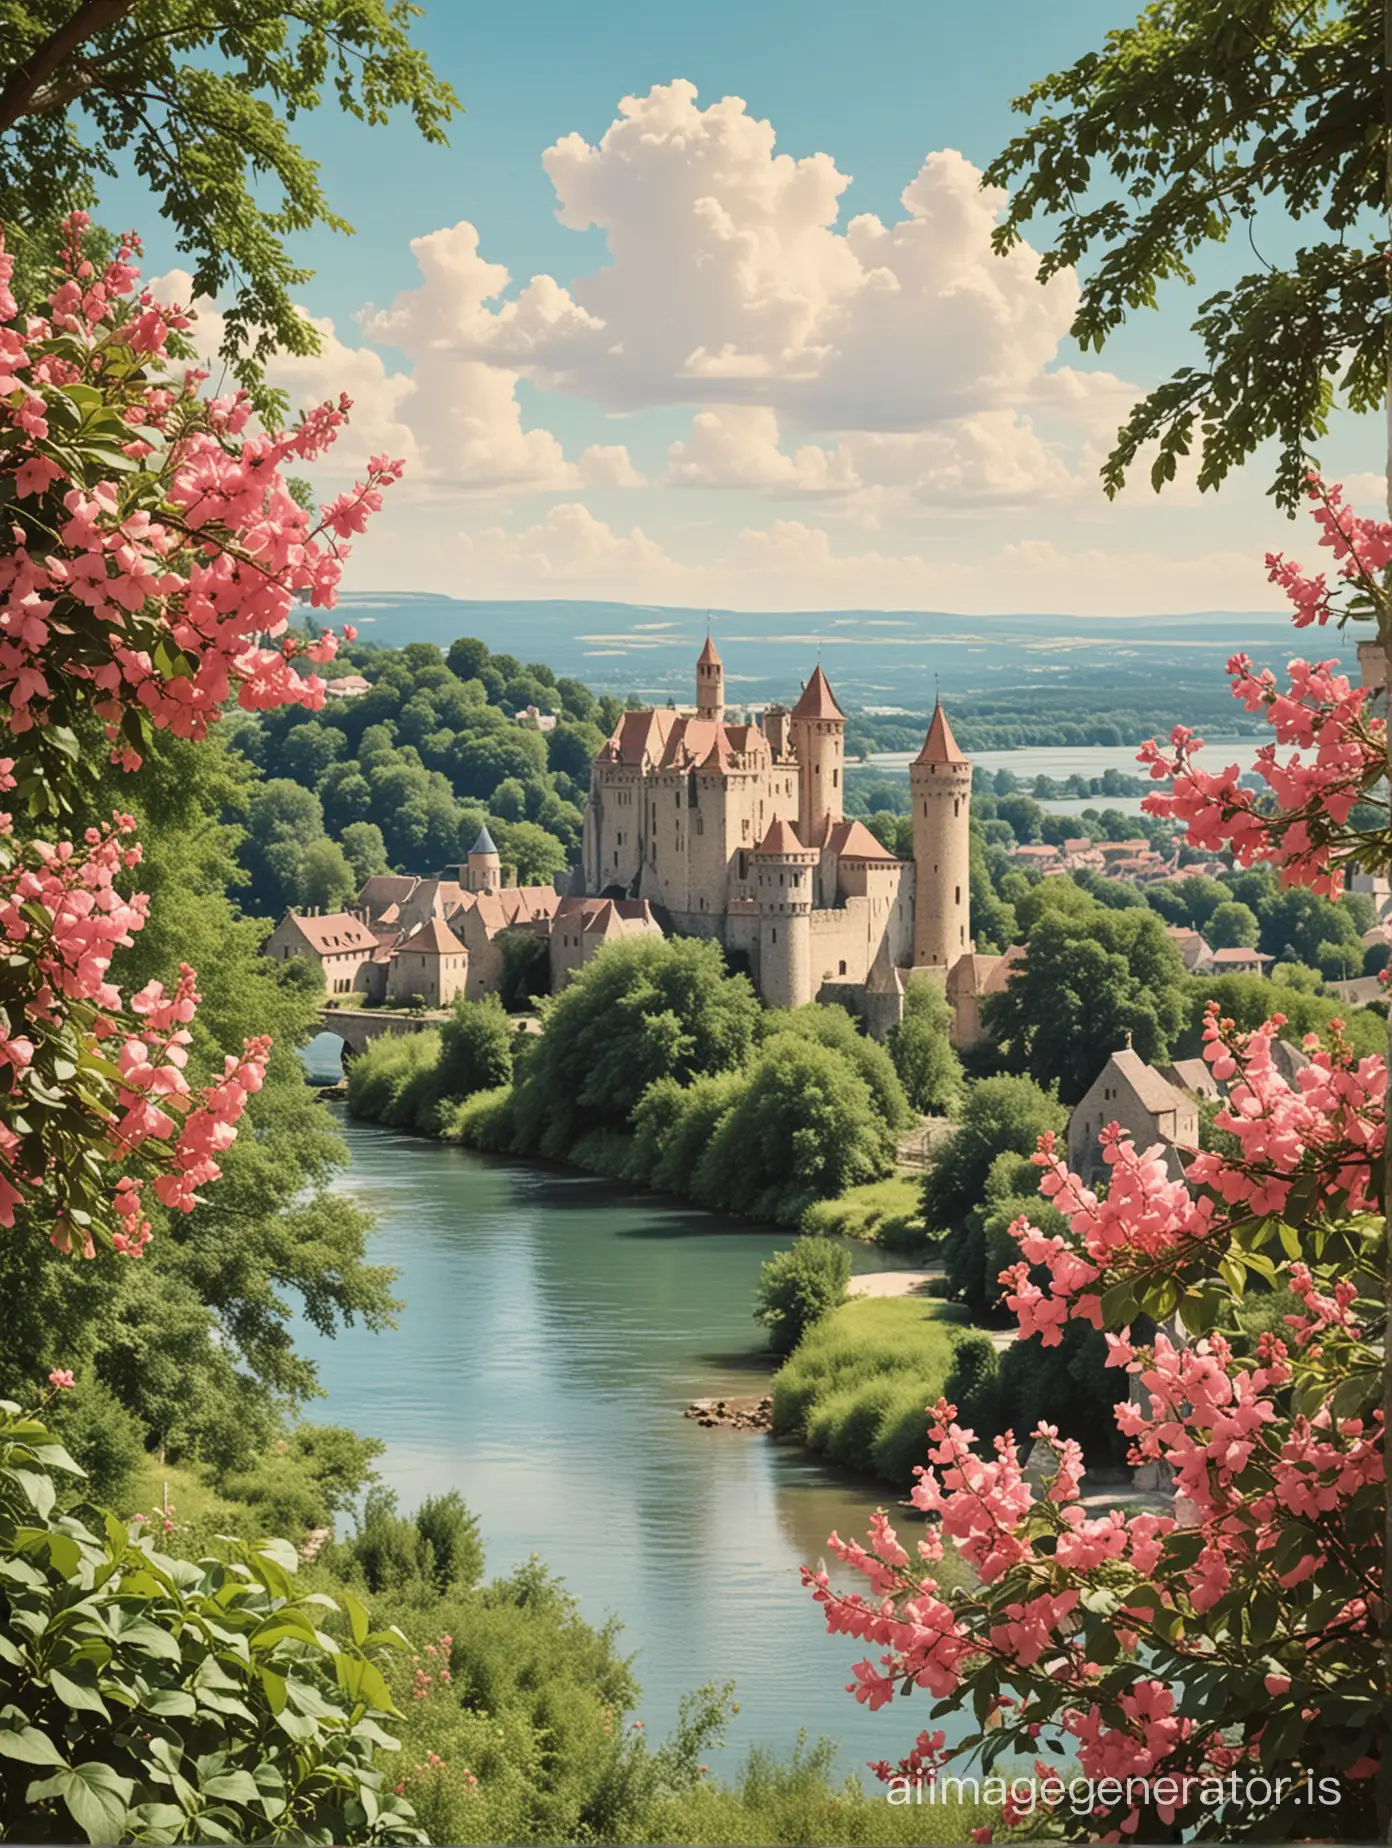 Vintage-Postcard-Summer-Scene-with-Medieval-Castle-and-River